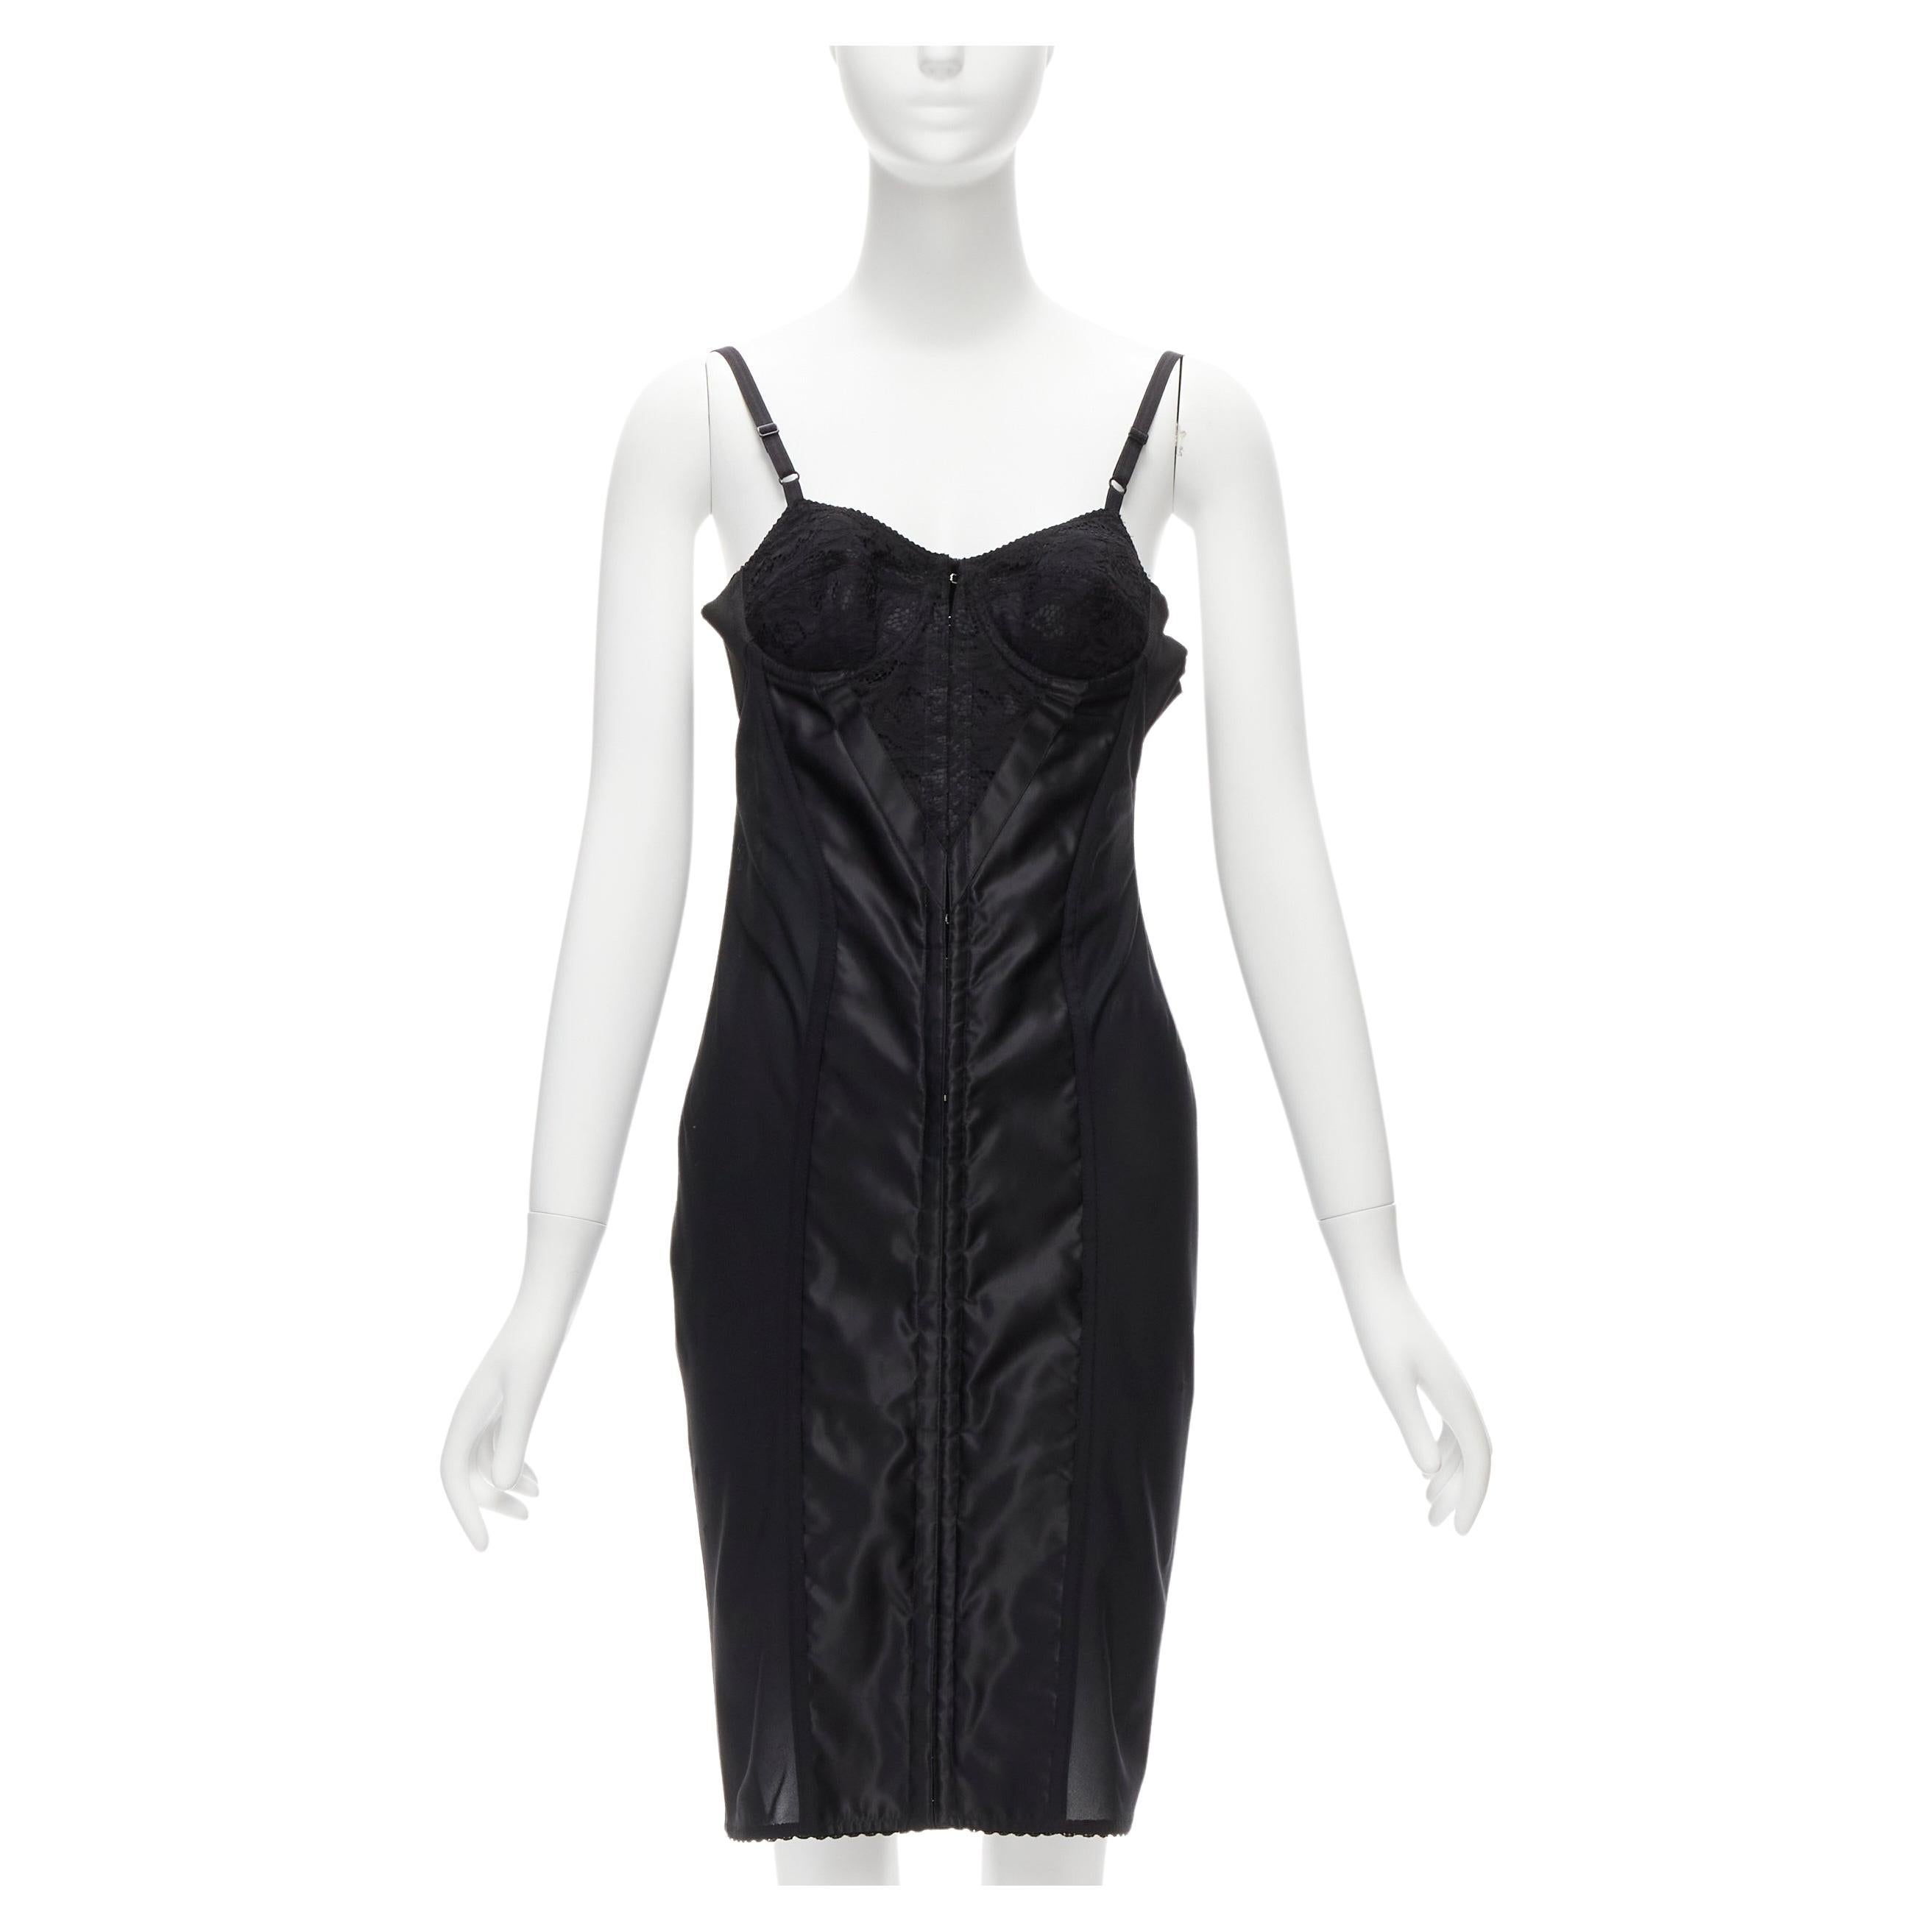 DOLCE GABBANA black lace bustier boned corset cocktail dress IT38 XS For Sale